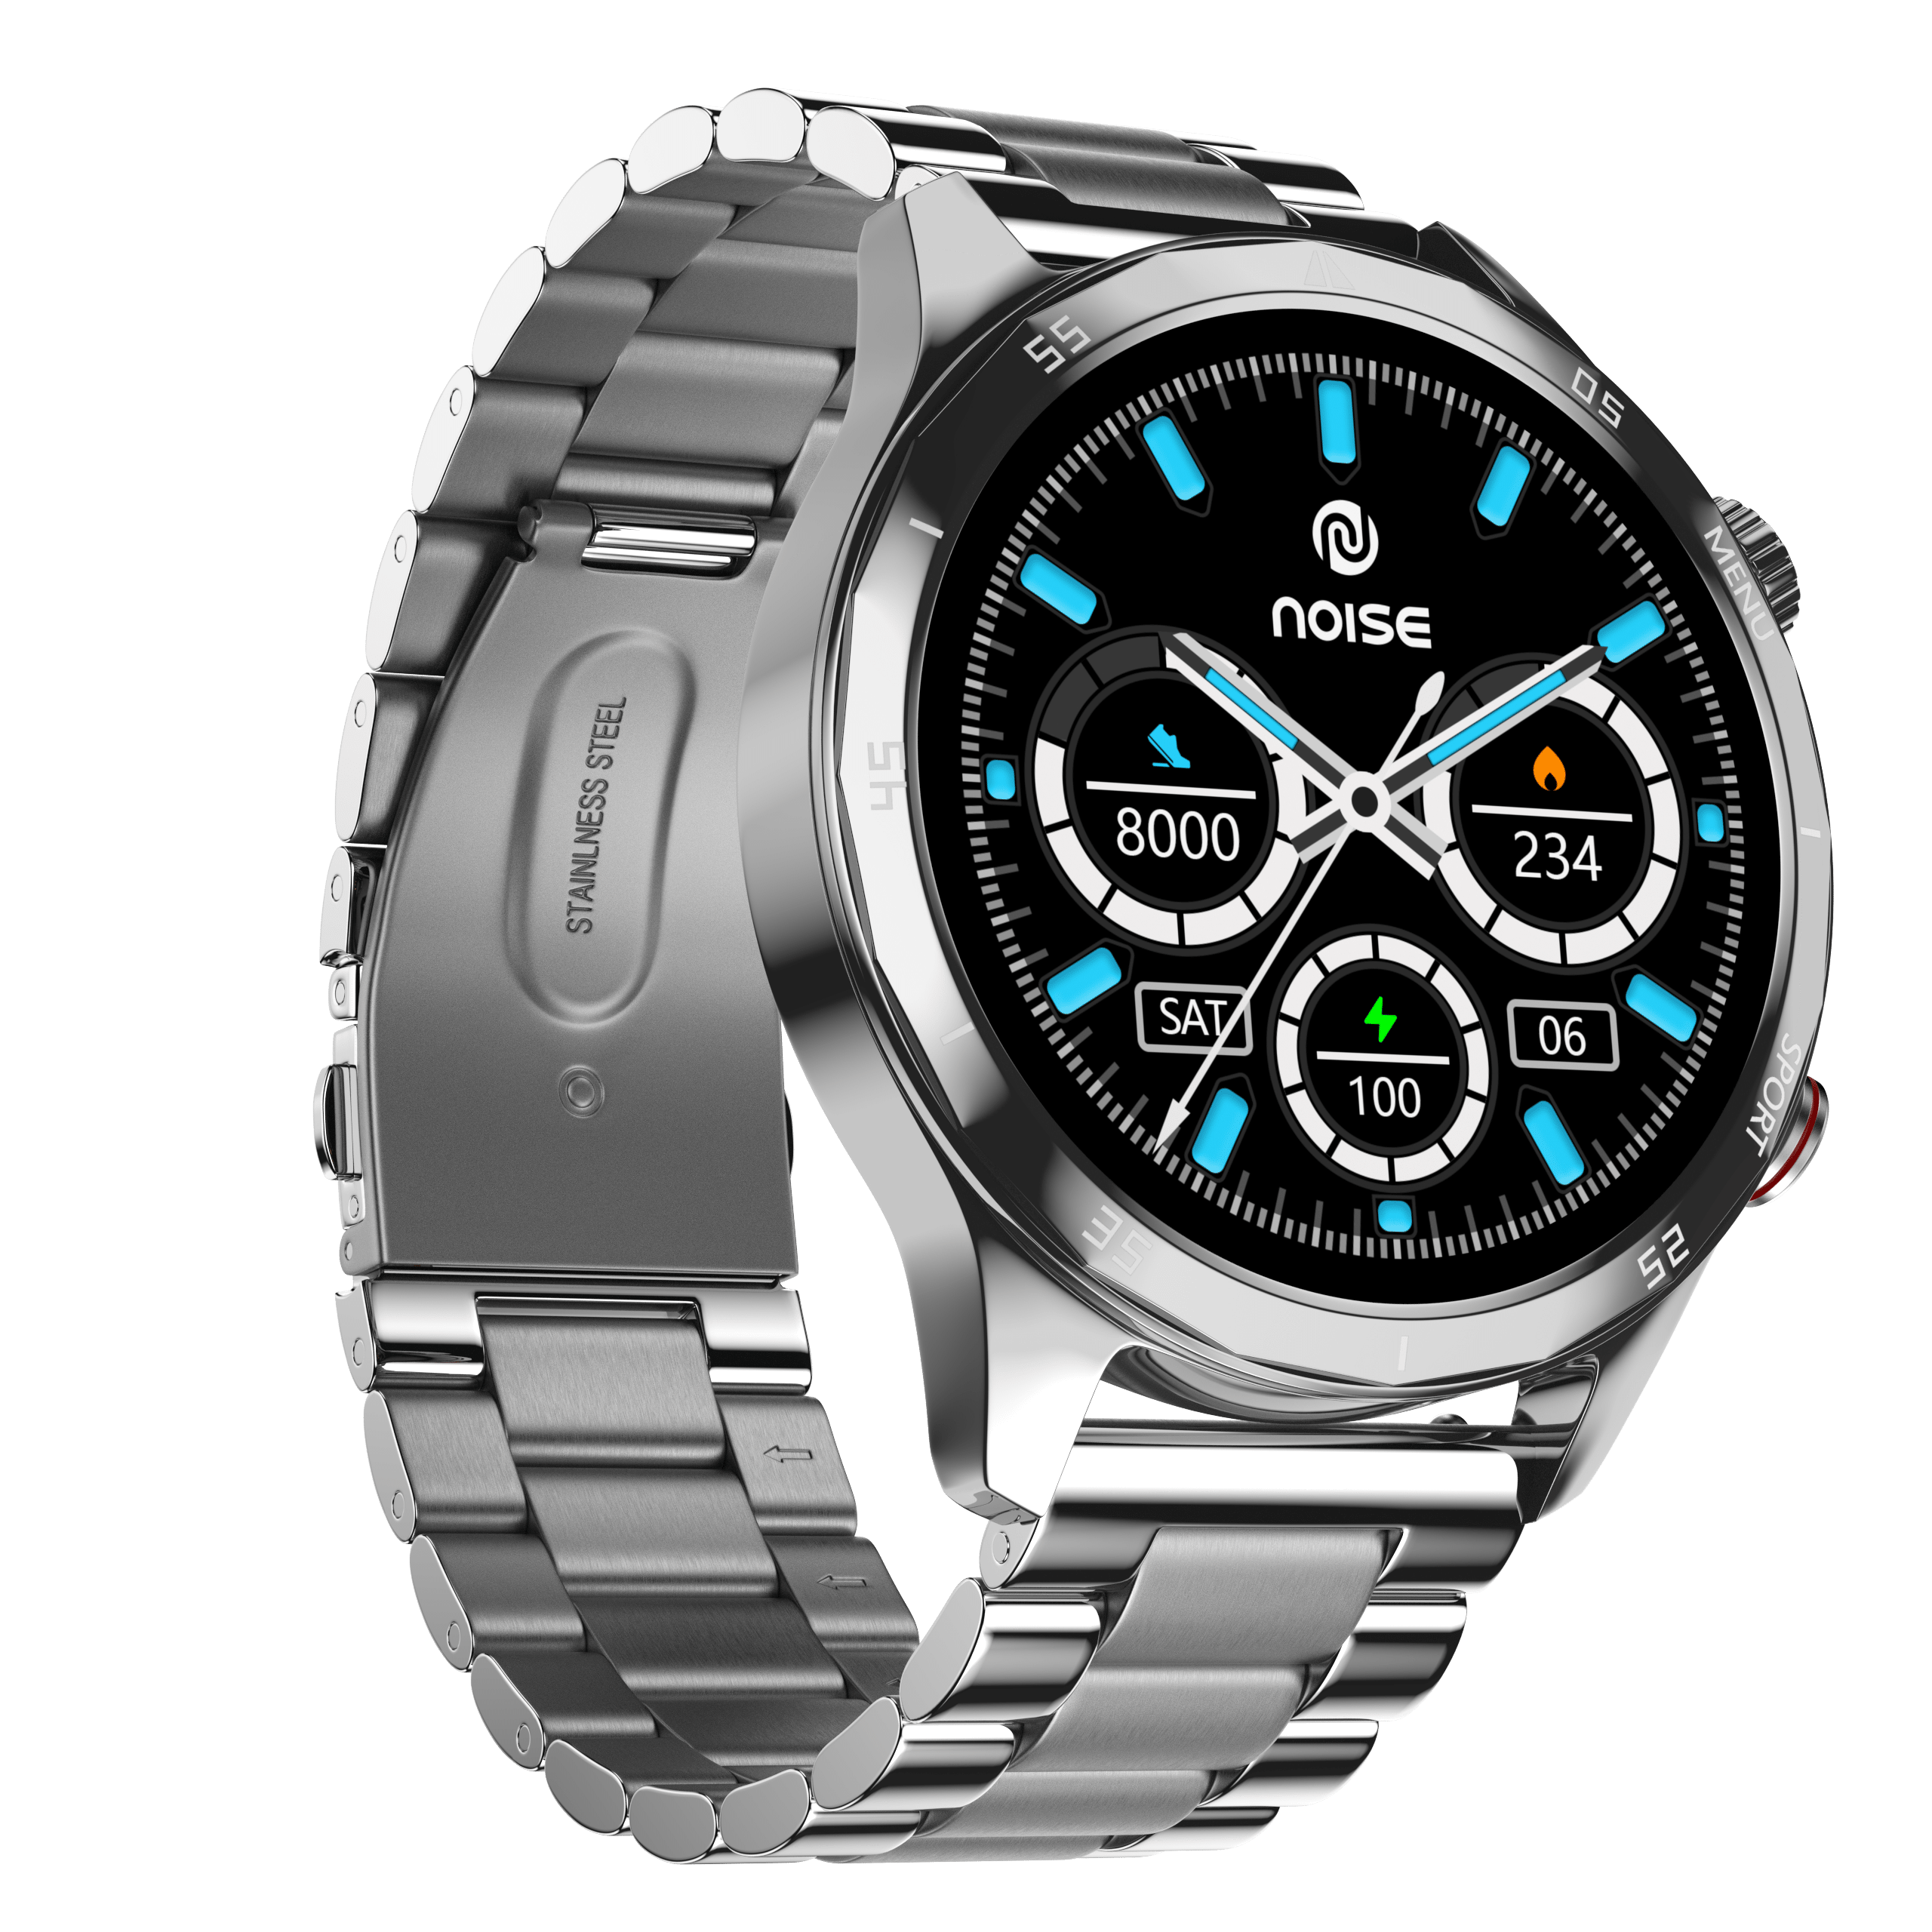 NoiseFit Metallix Smartwatch Specifications 